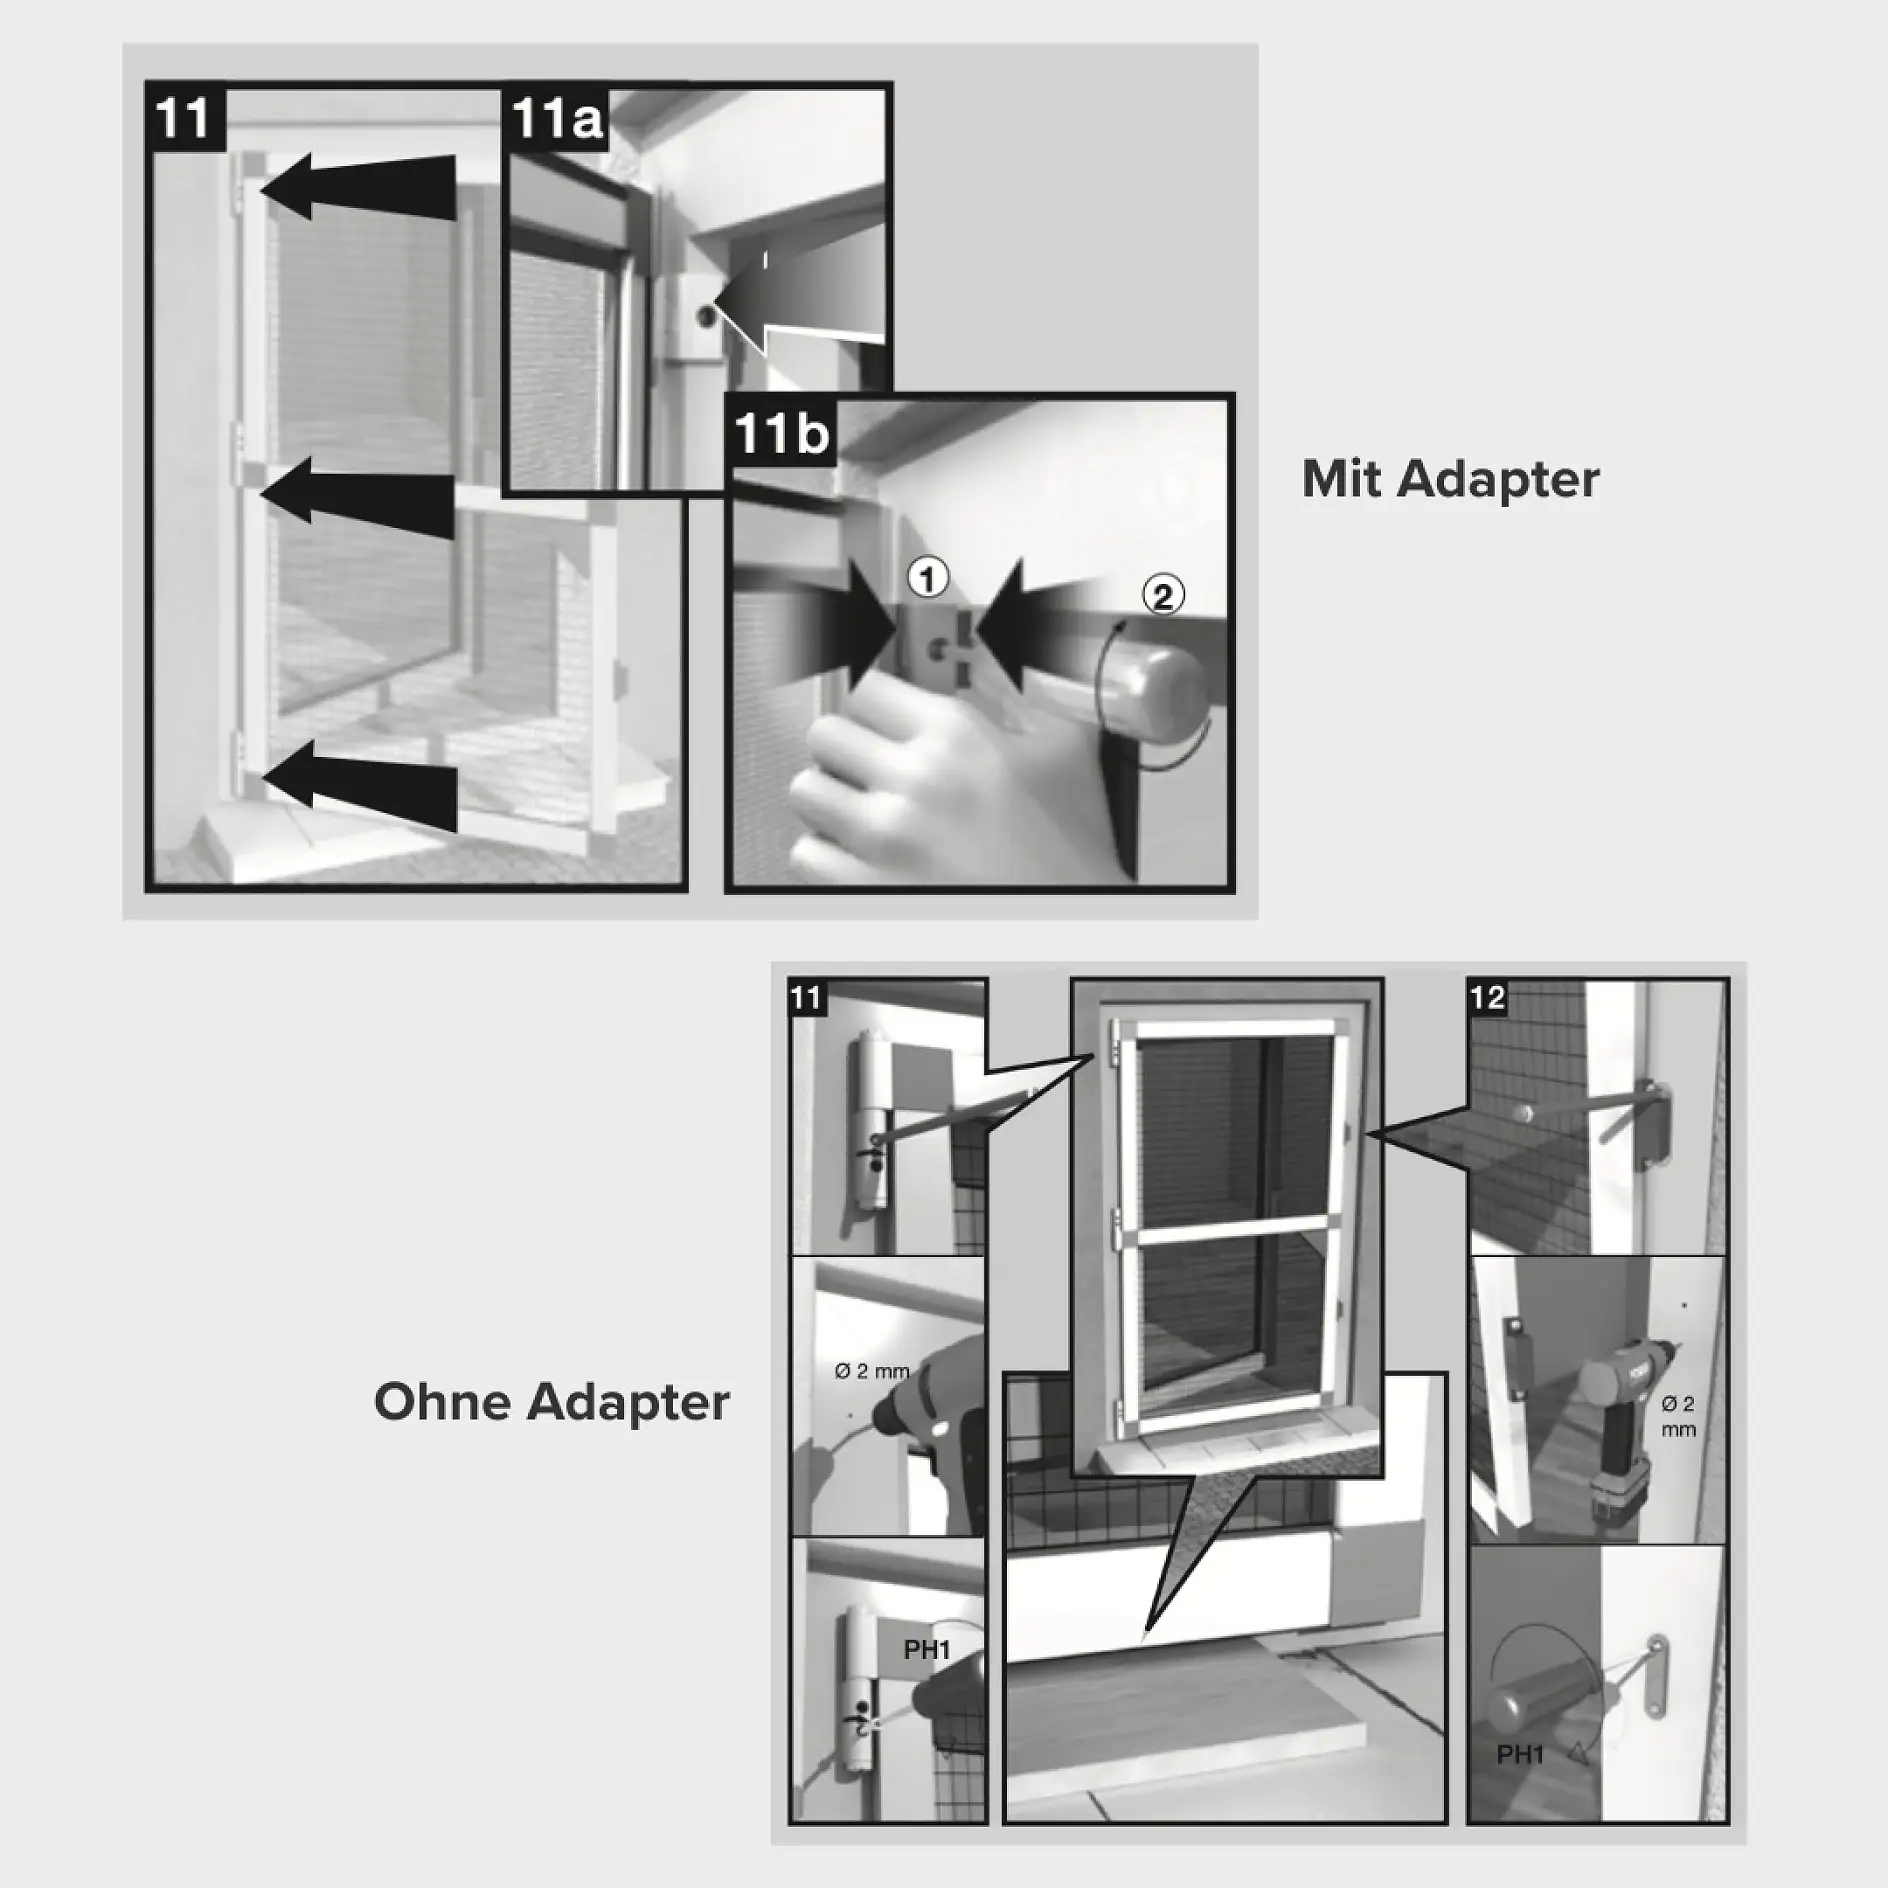 ALU Comfort Türen und Adapter Montageanleitung Schritt 11 Kombiniert